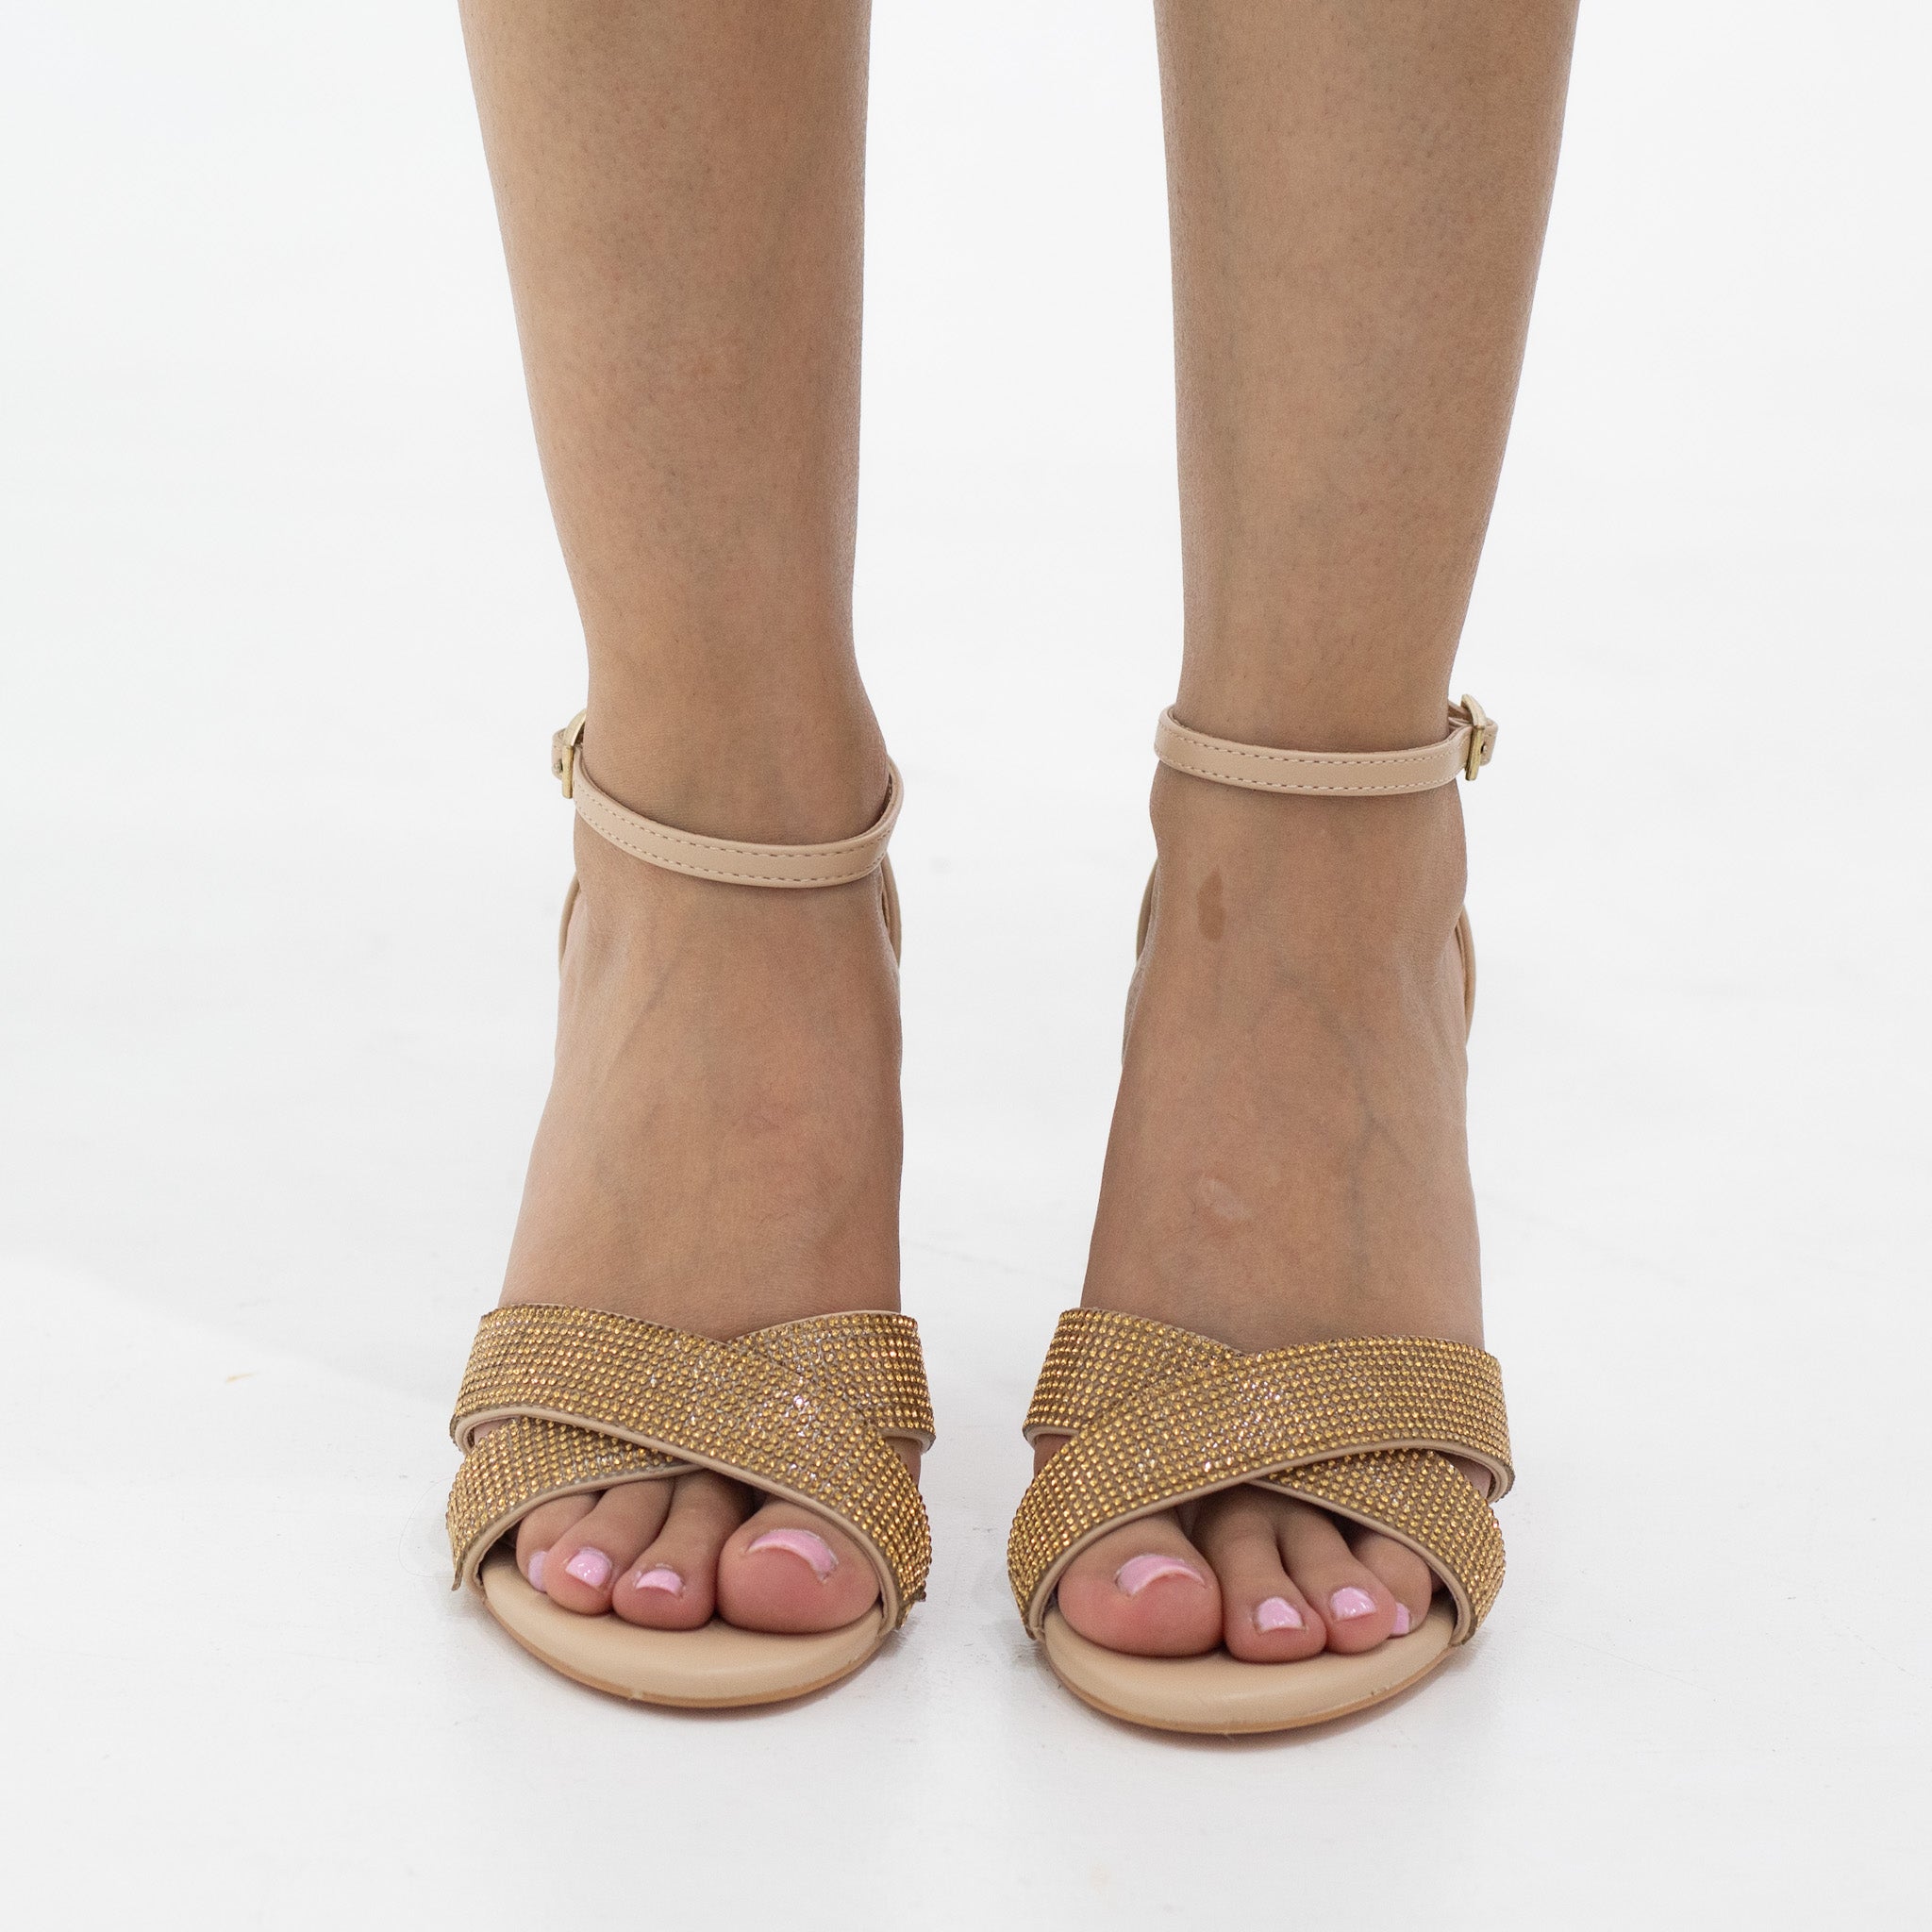 Nude diamante band ankle strap 9cm heel sandal romania